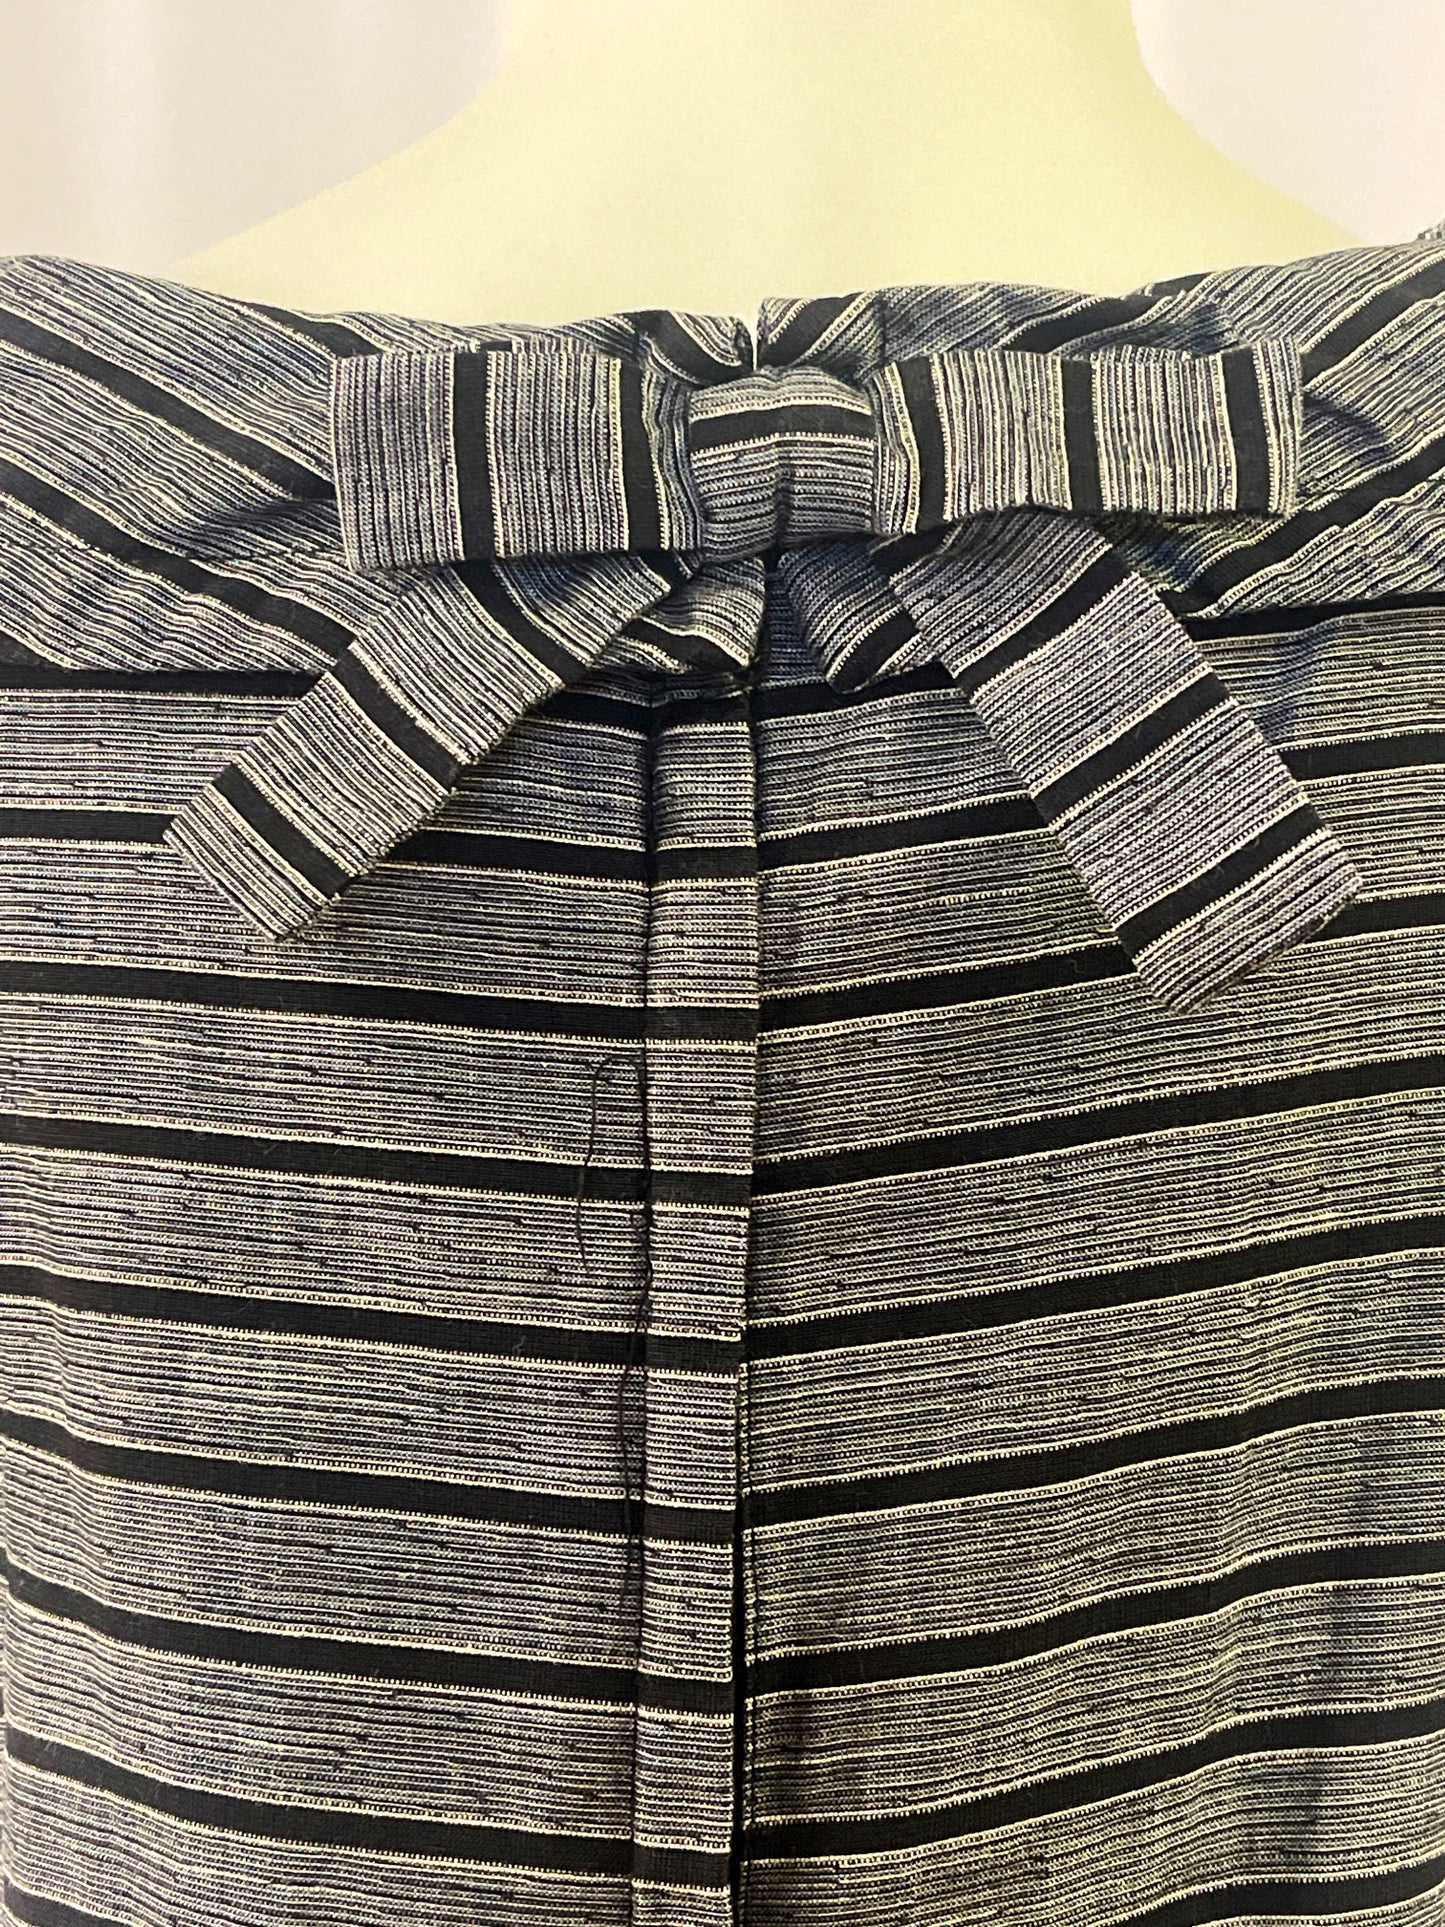 50s Black & White Striped Wiggle Dress